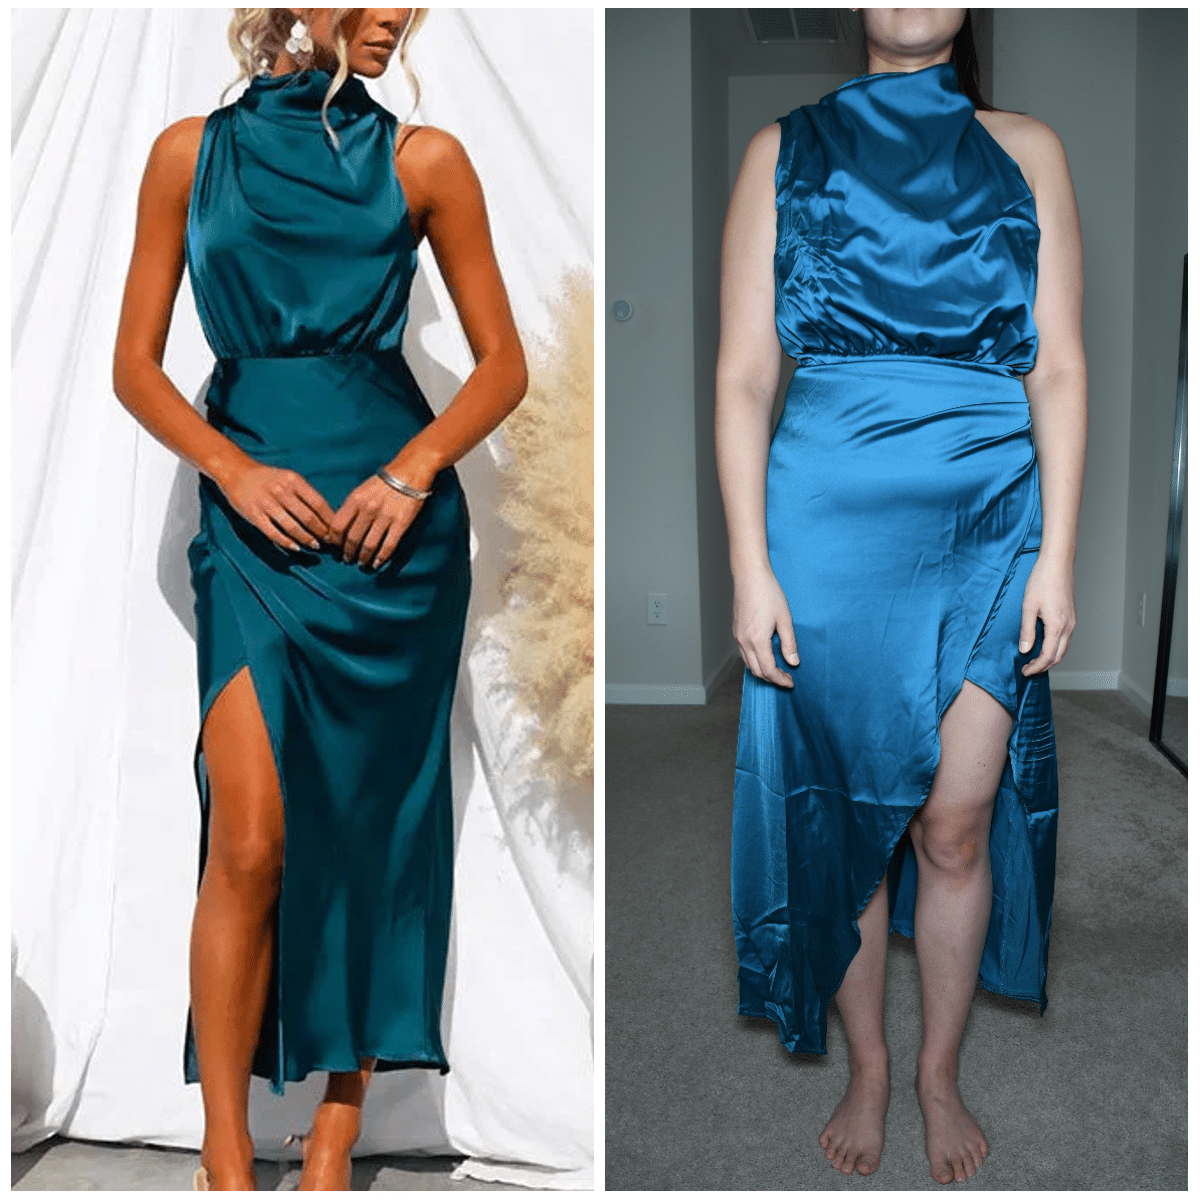 moxidress satin dress comparison